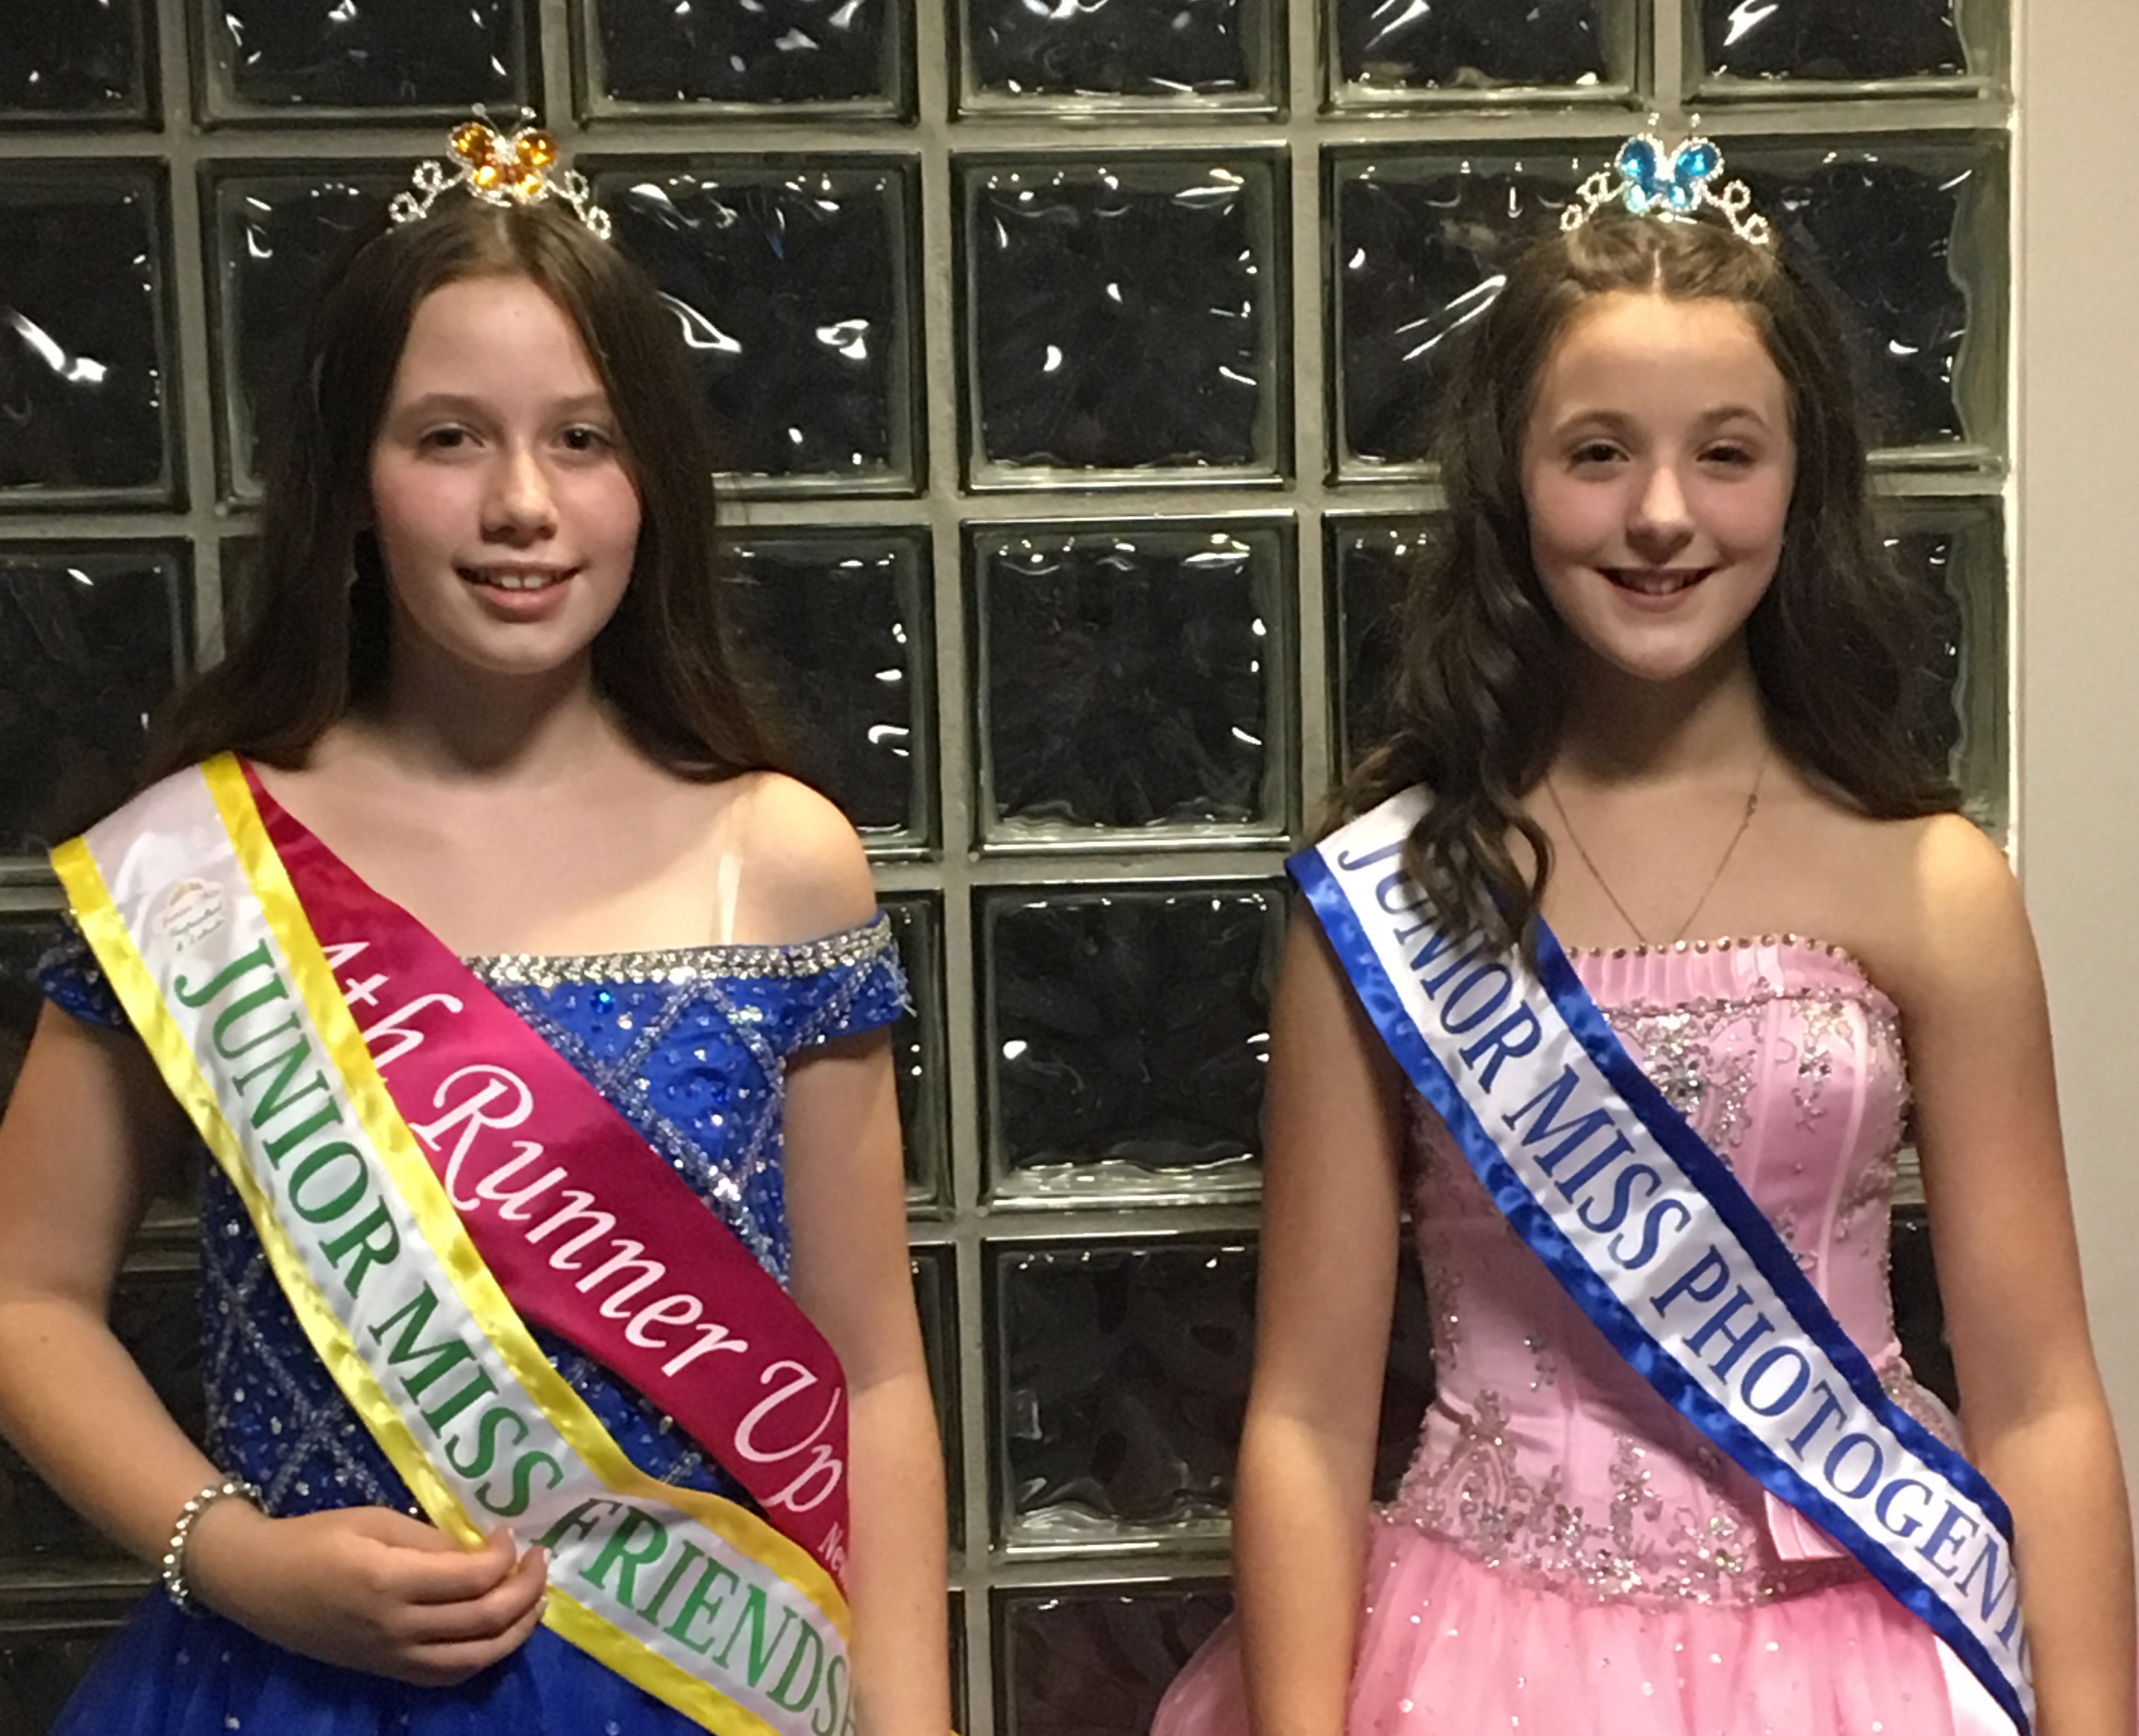 CBS girls take home prizes at Junior Miss Newfoundland pagea. 